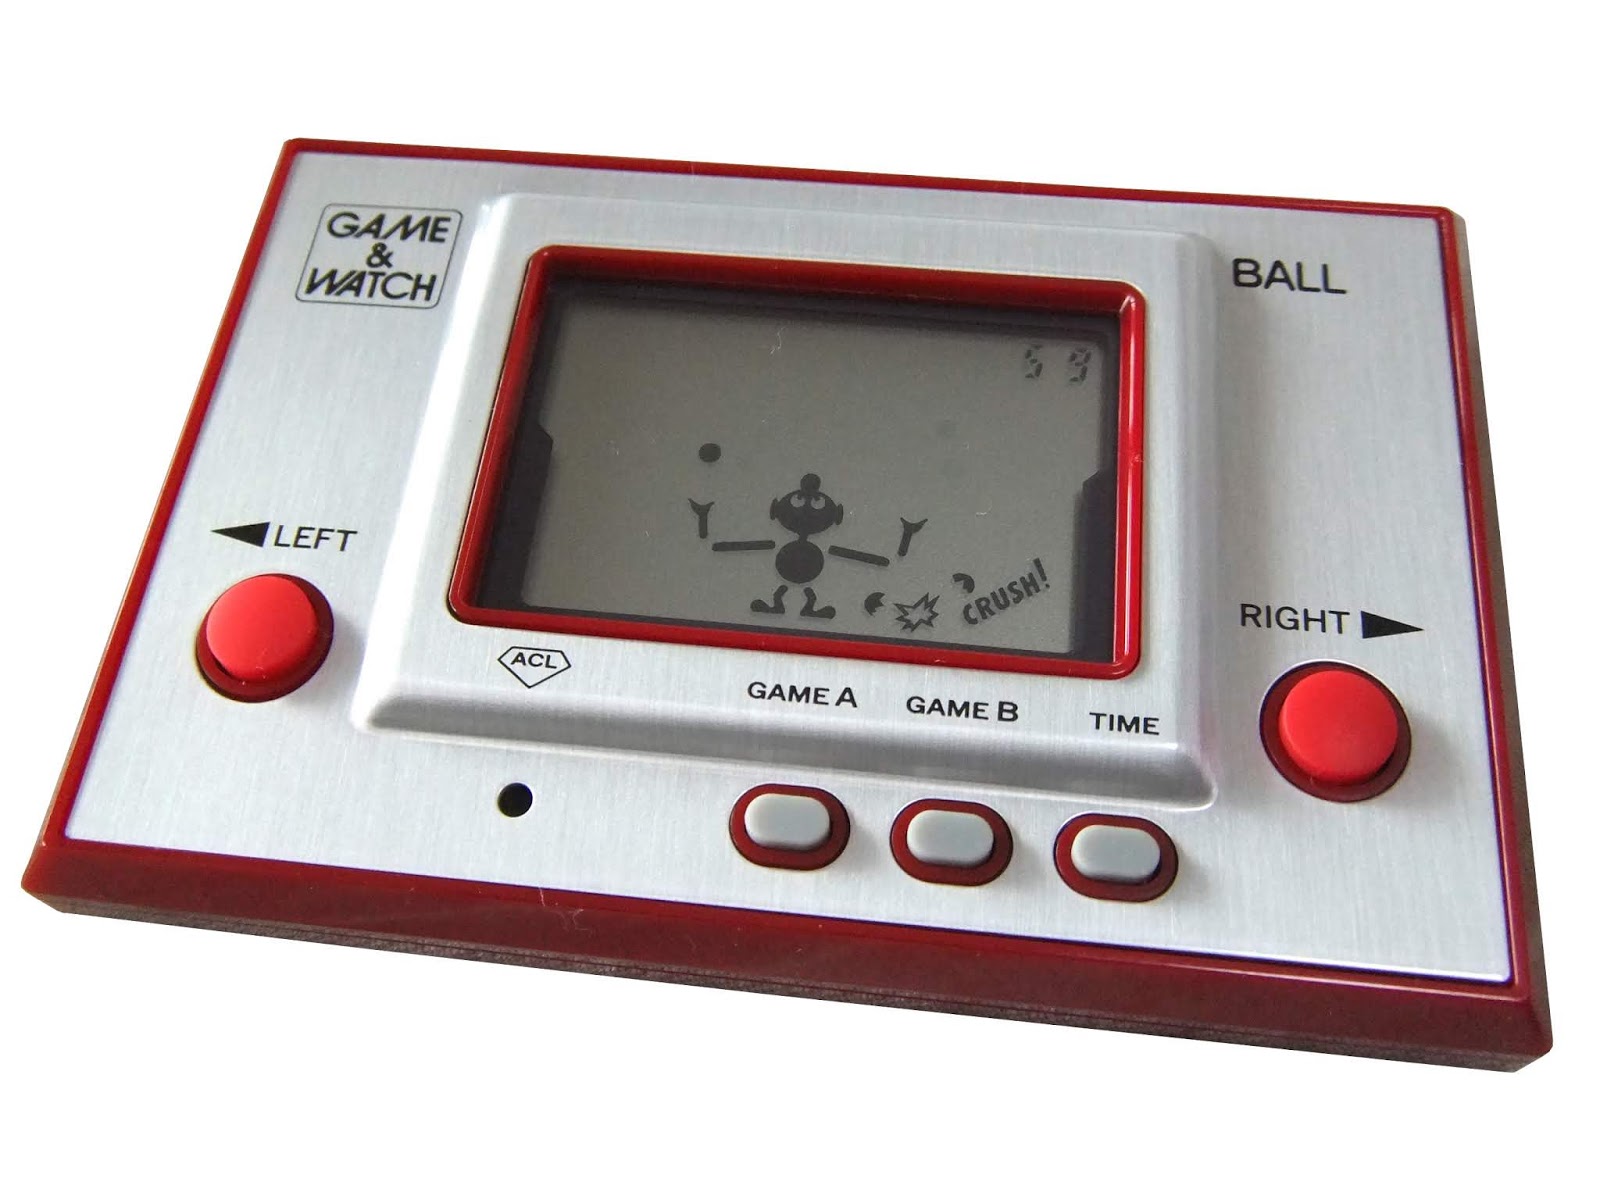 Retromobe - retro mobile phones and other gadgets: Nintendo Game